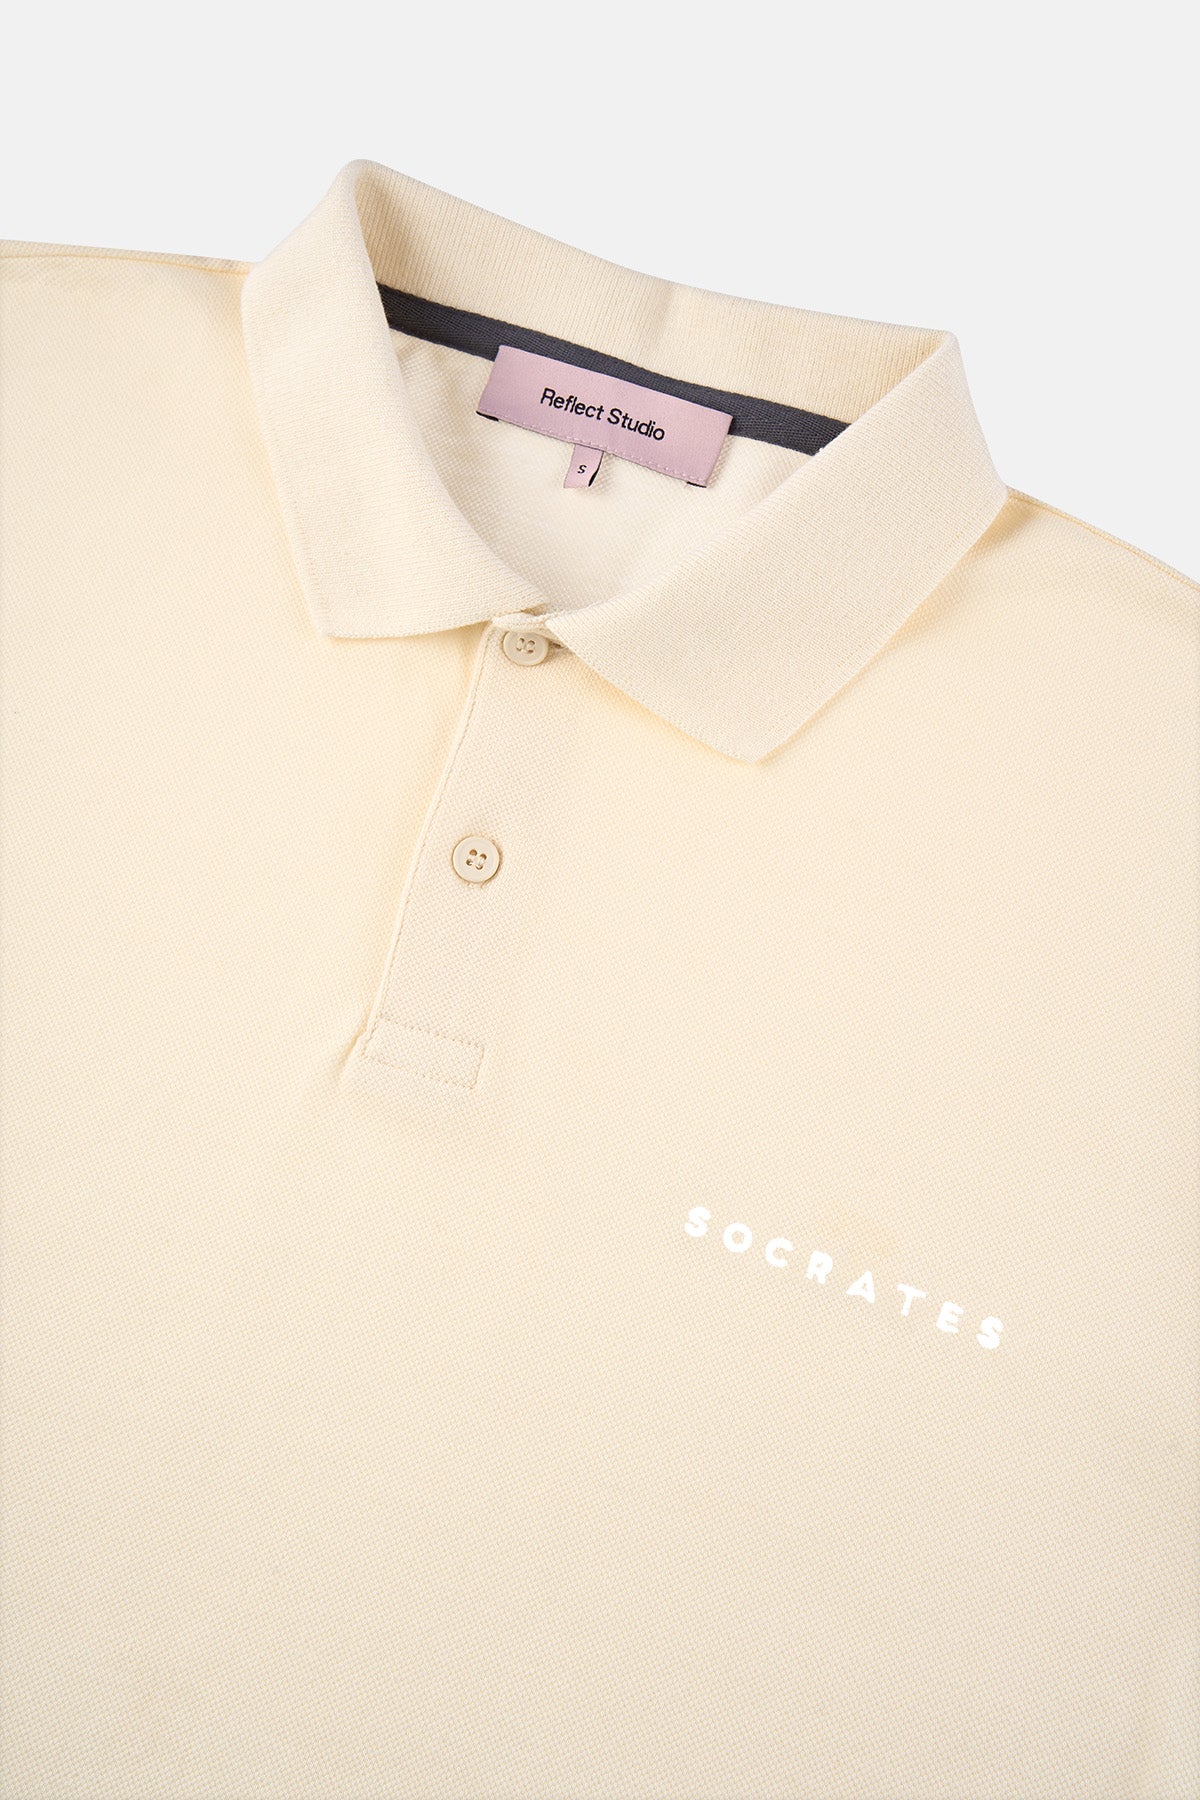 Socrates Polo T-shirt - Ekru